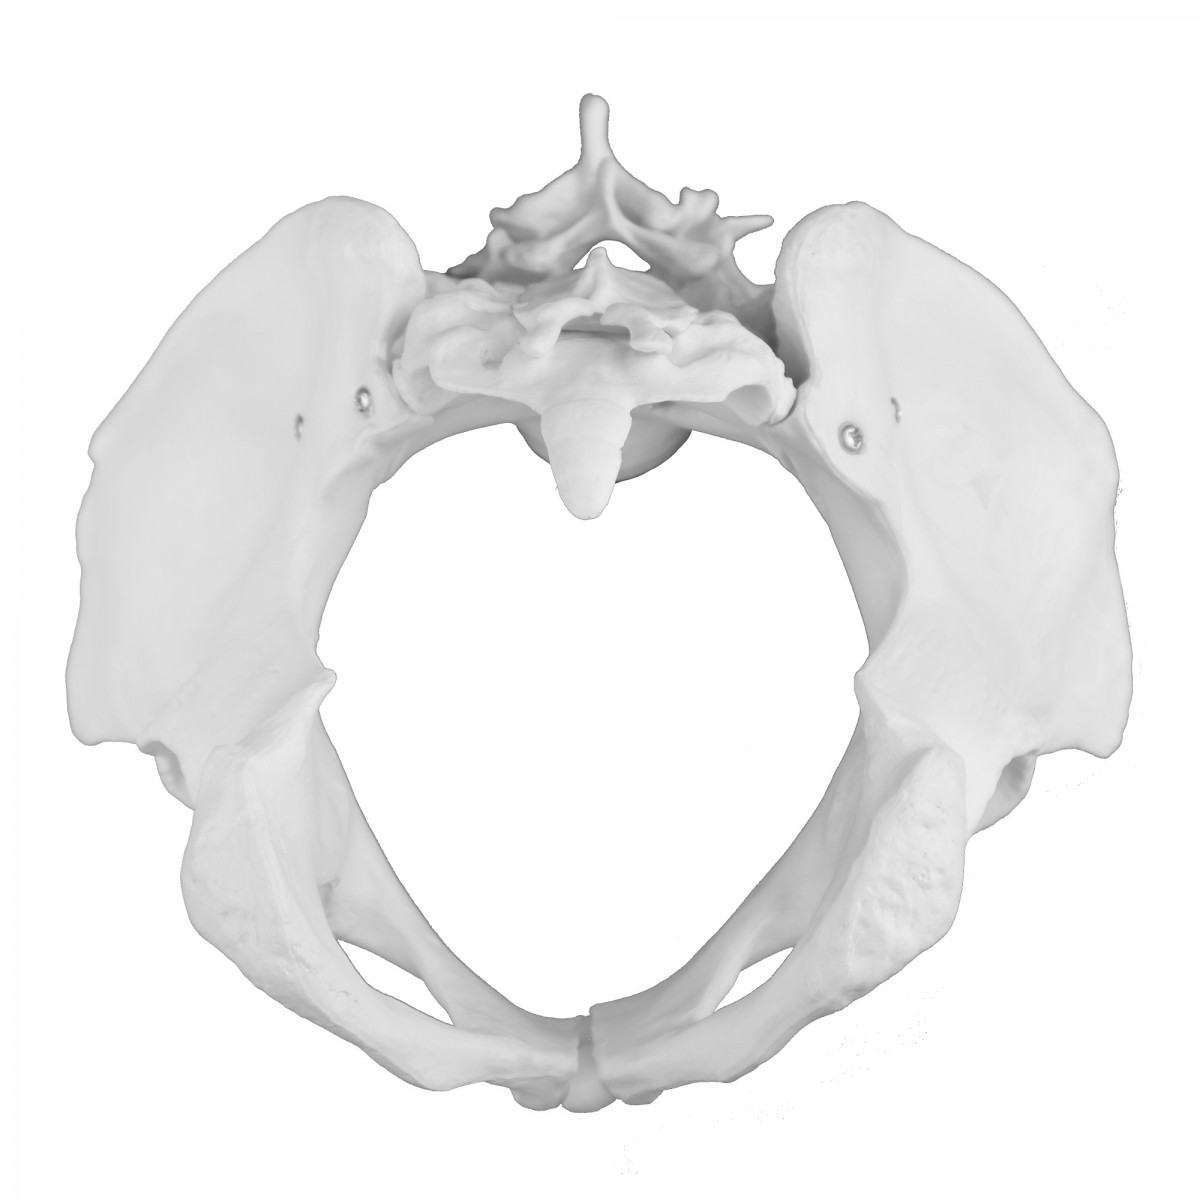 VAP217 Female Pelvic Bones - Pelvis - Anatomical Models